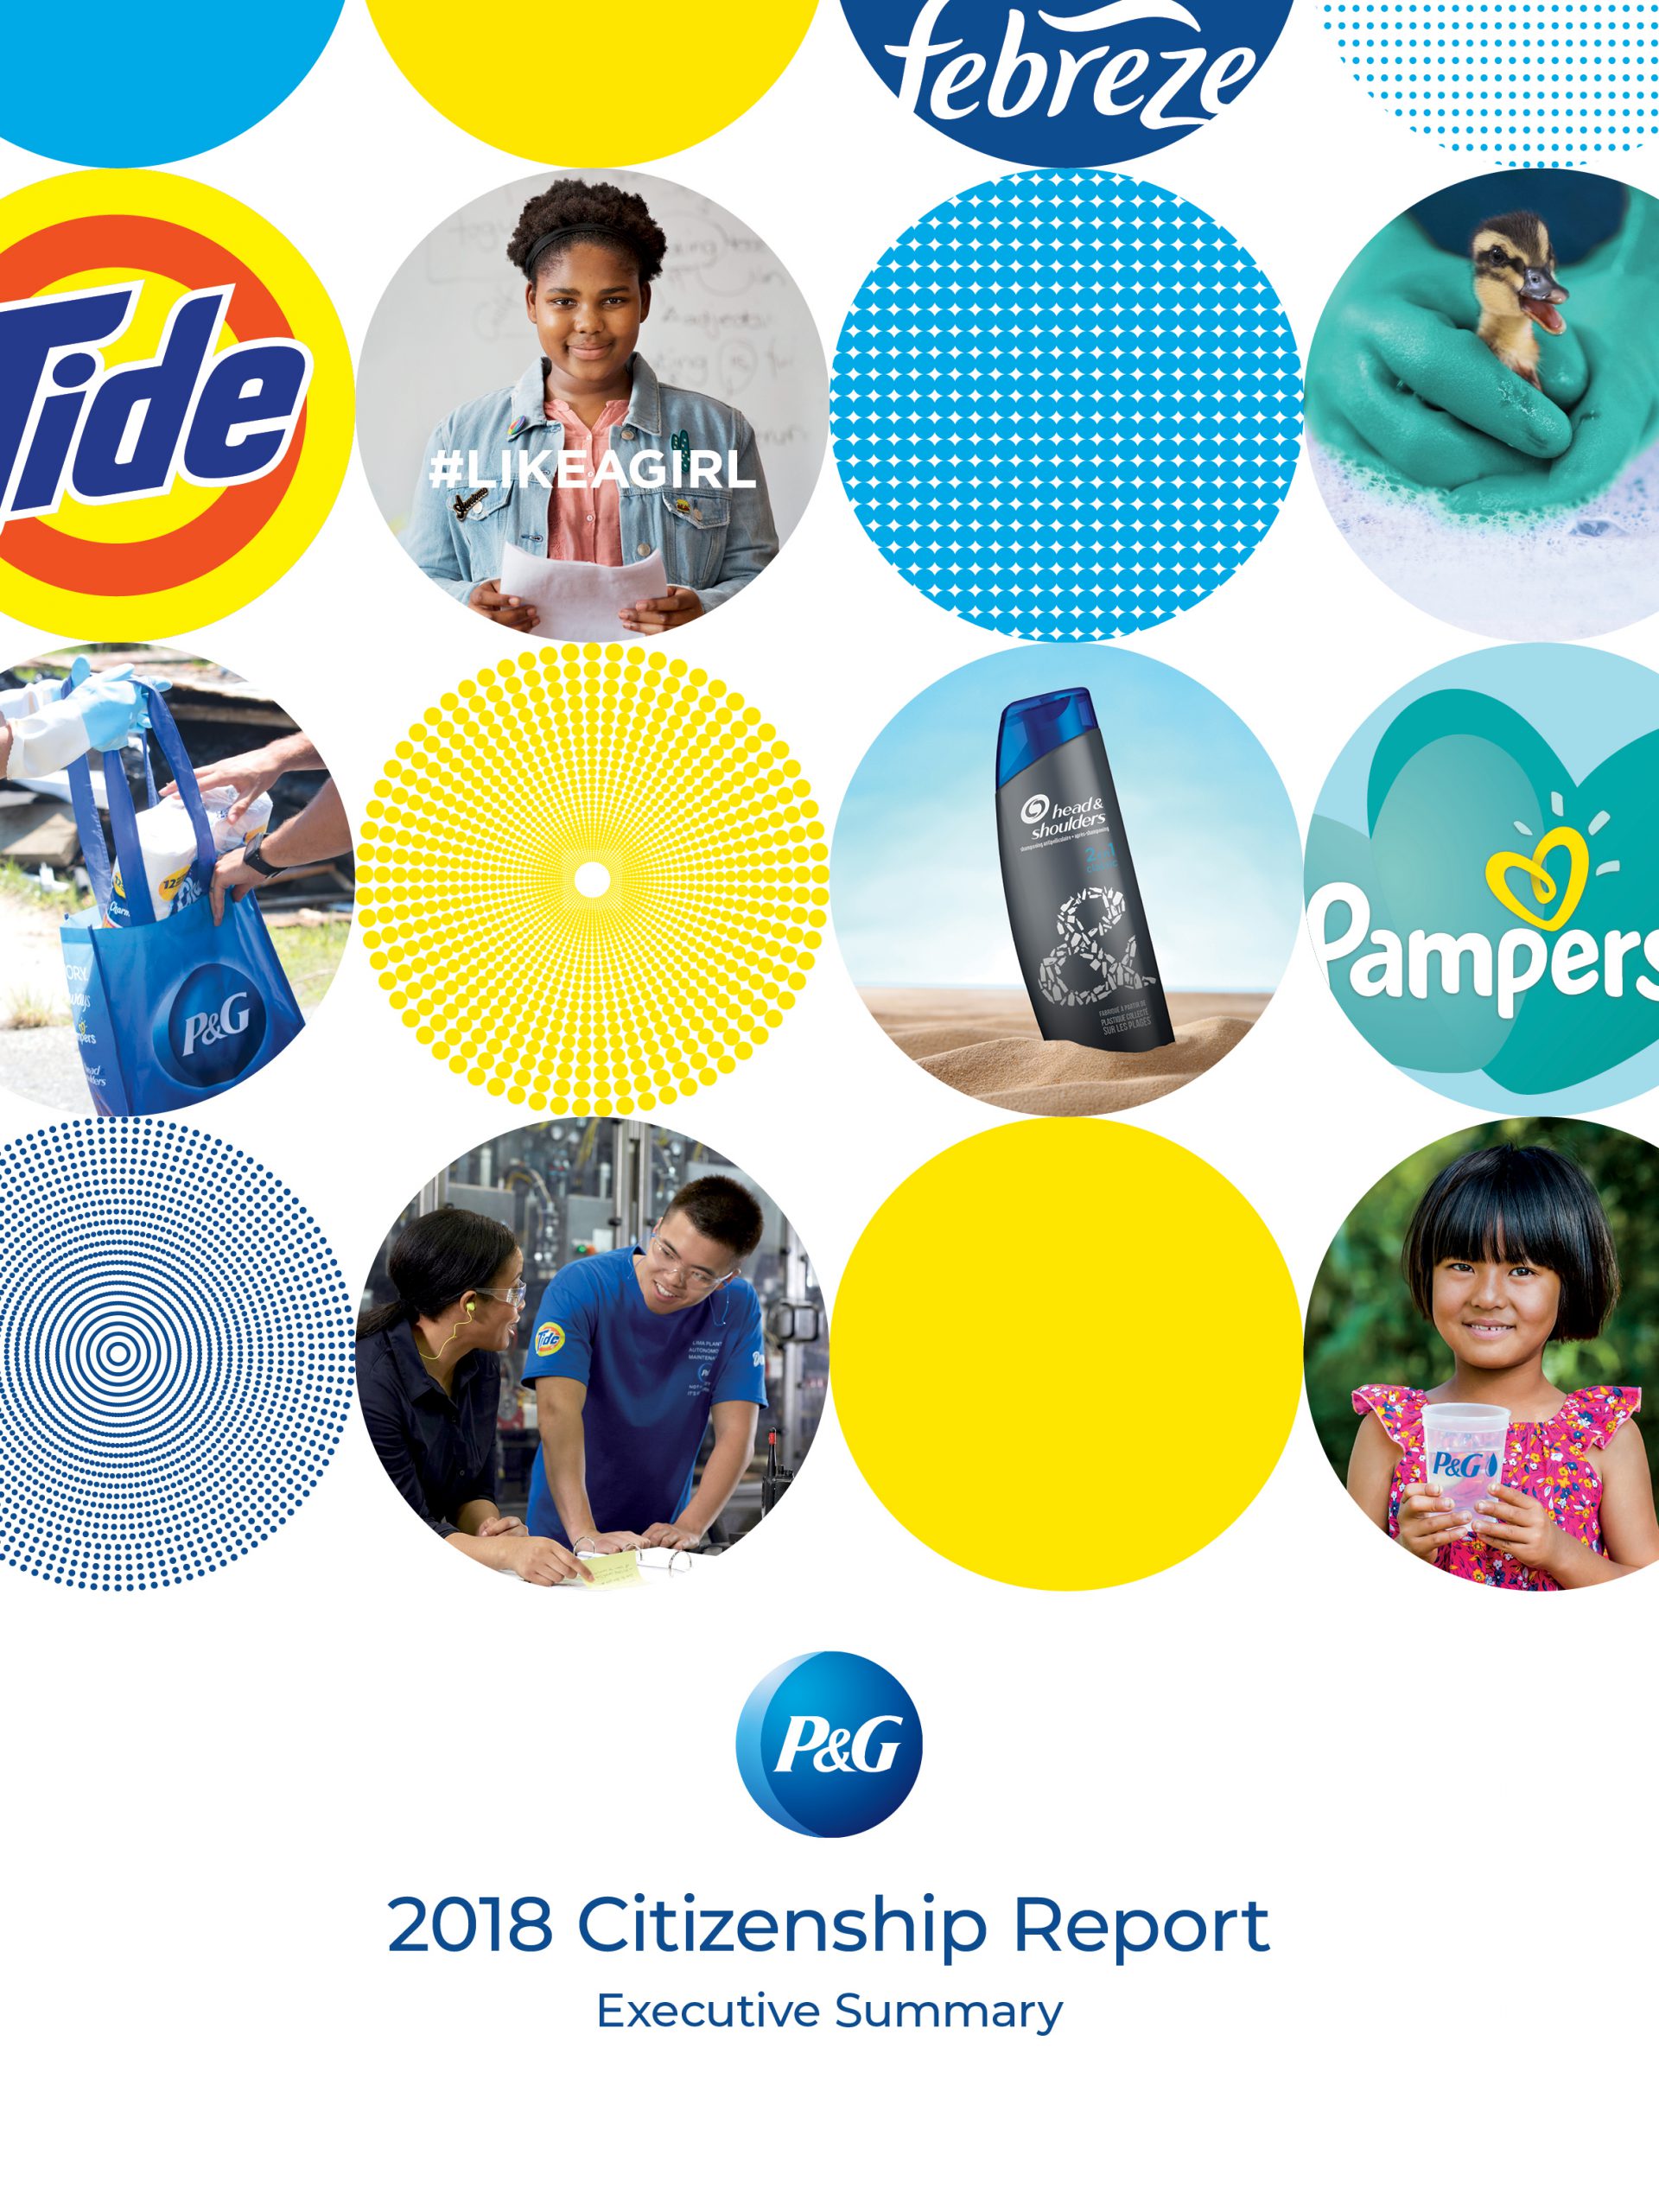 Raport CSR 2018 firmy P&G